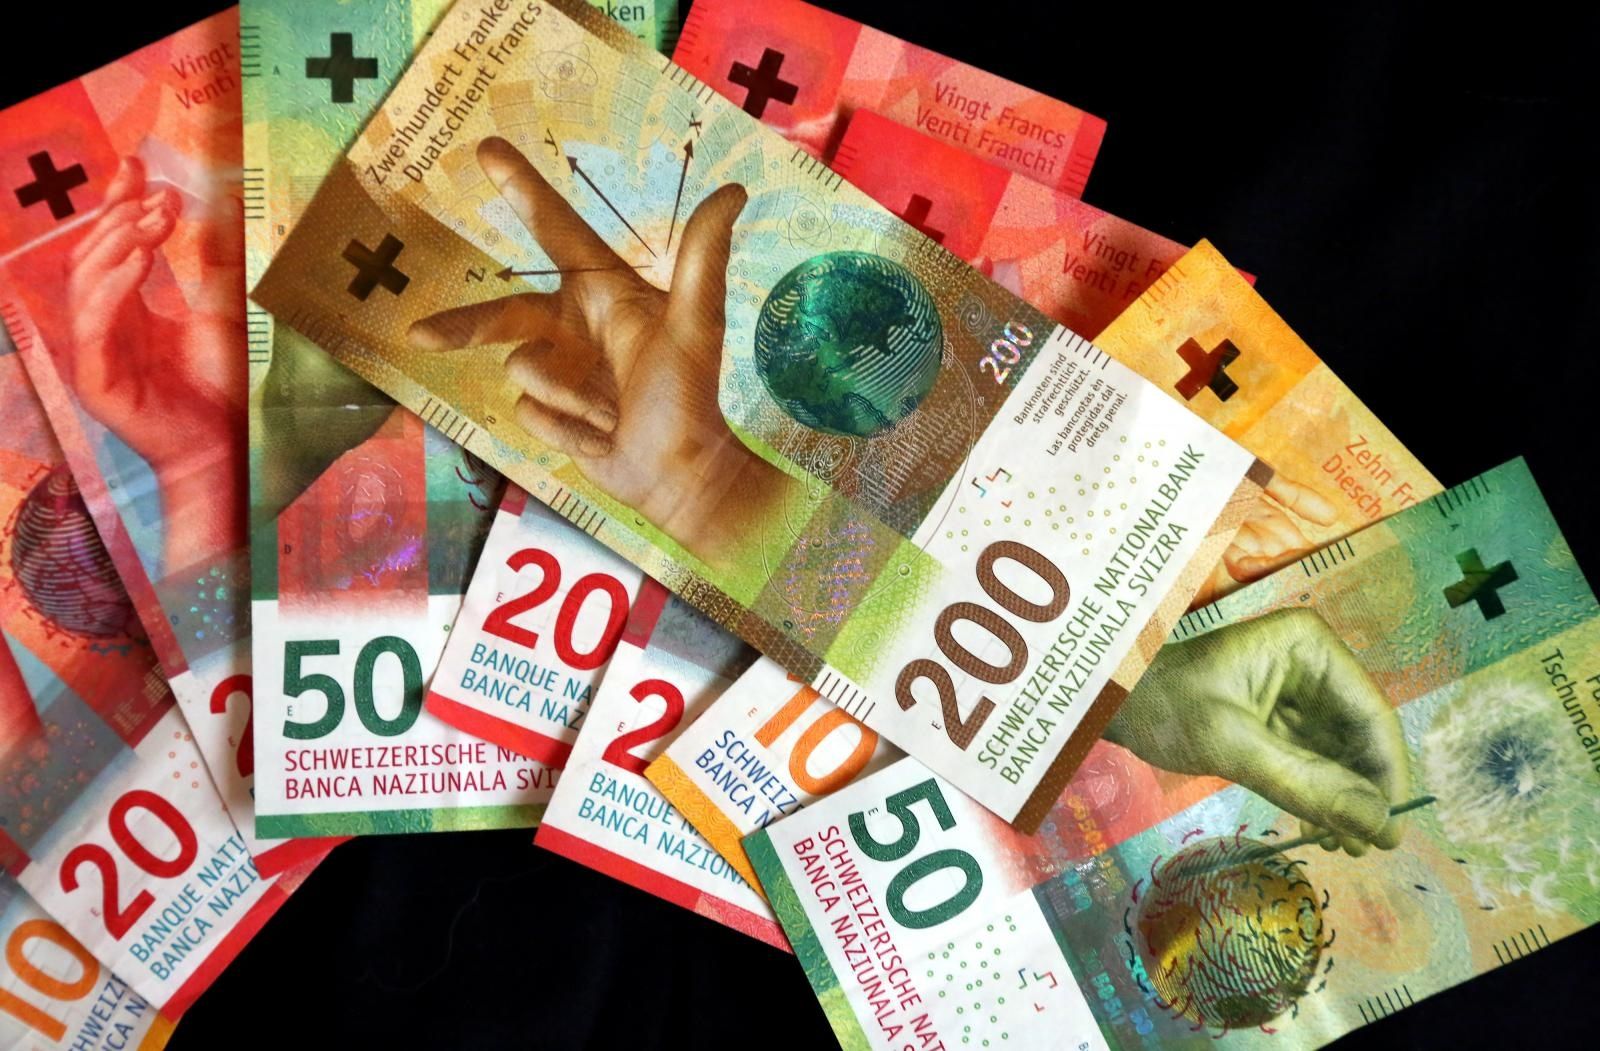 Tijekom 2018. godine Švicarska je pustila u opticaj nove papirnate novčanice švicarskog franka 14.01.2019., Sibenik - Od 2018. godine Svicarska je pustila u opticaj nove papirnate novcanice franka. Photo: Dusko Jaramaz/PIXSELL